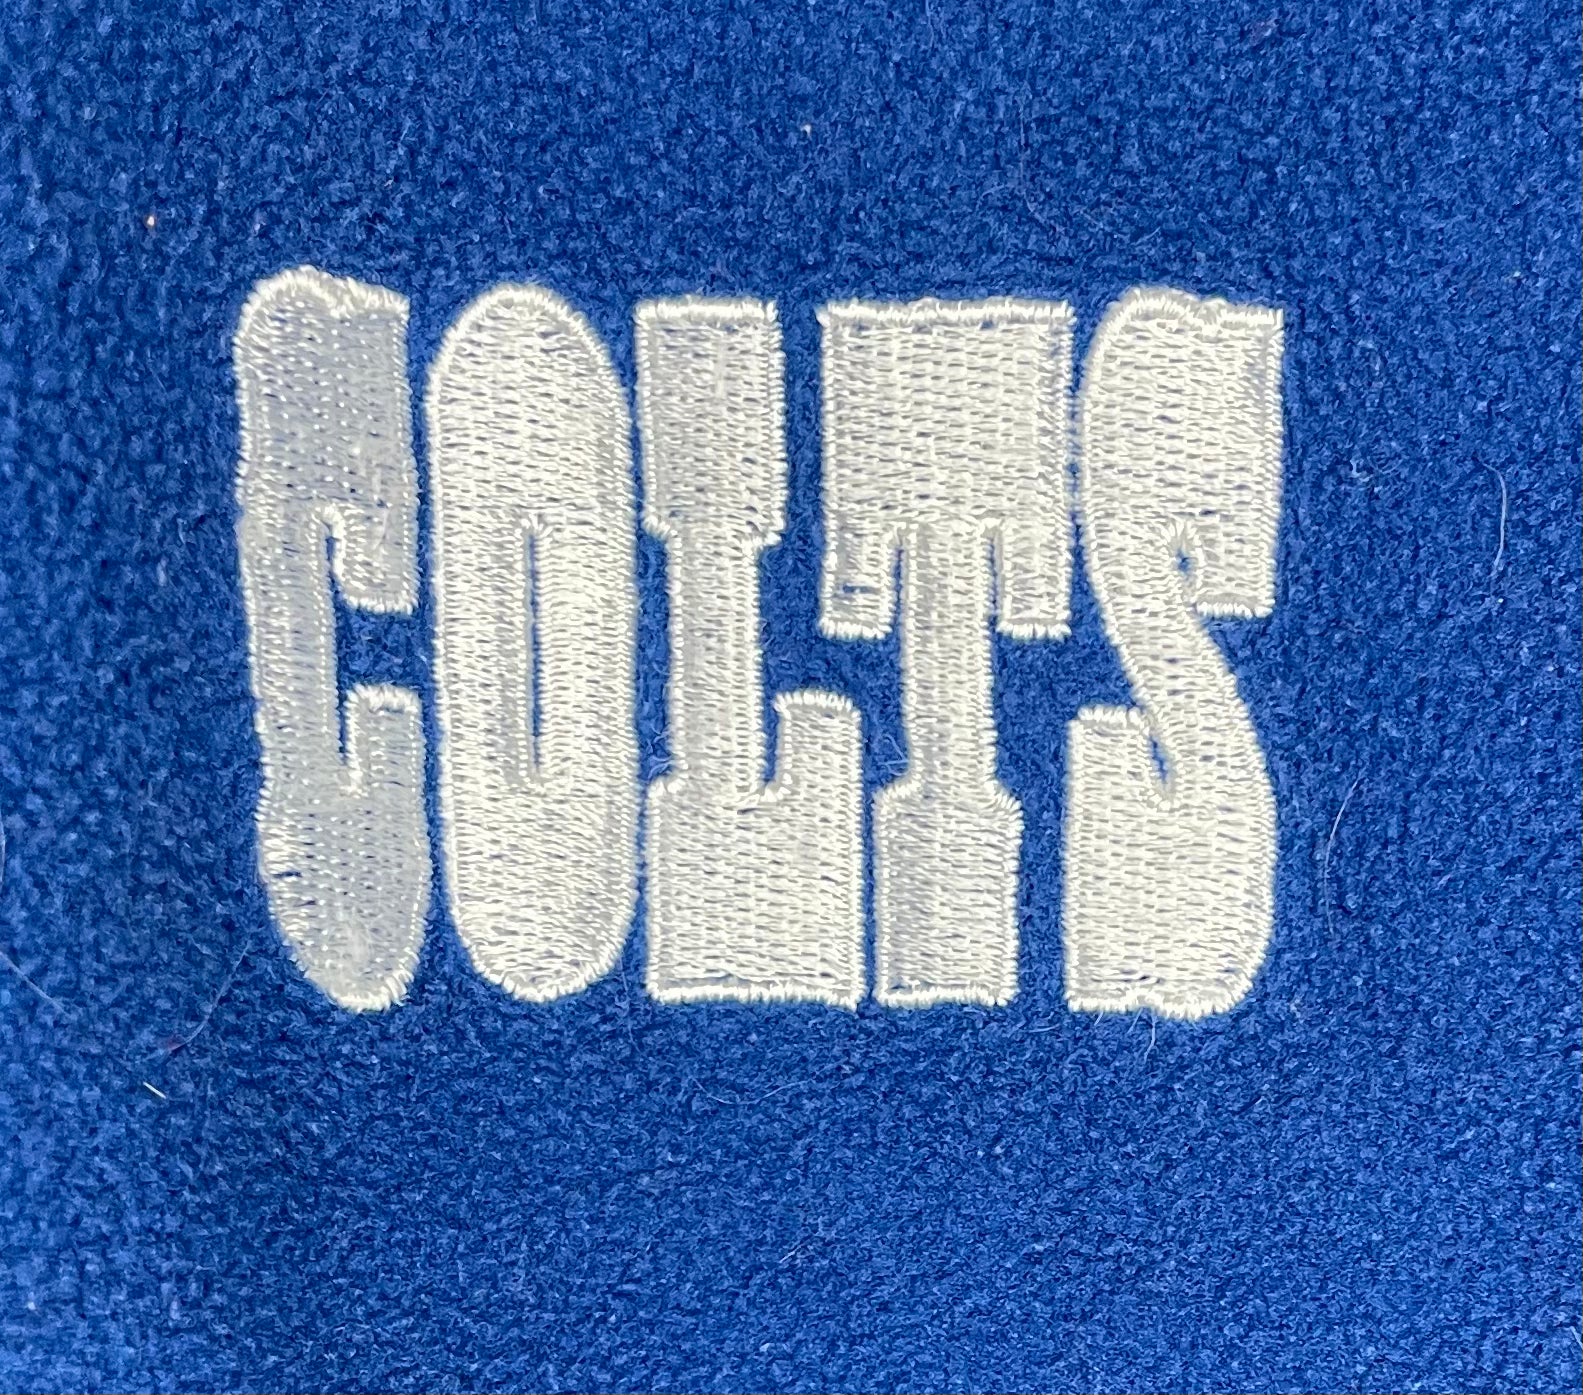 Reebok Vintage Q-Zip Fleece Sweater Indianapolis Colts Blau Größe XL